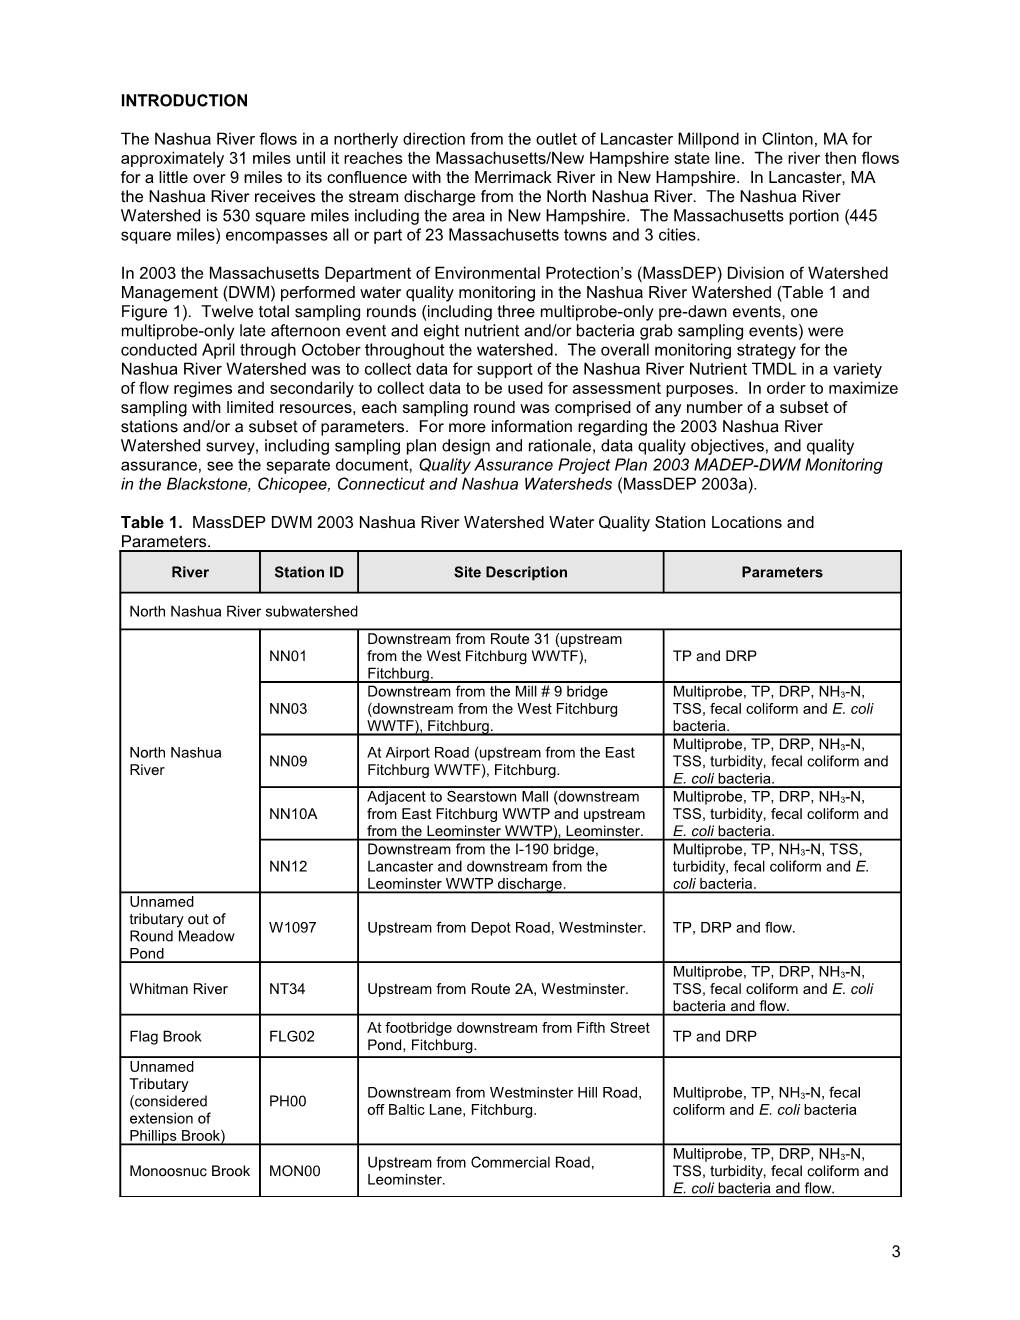 Charles River Watershed 2002 Water Quality Technical Memorandum